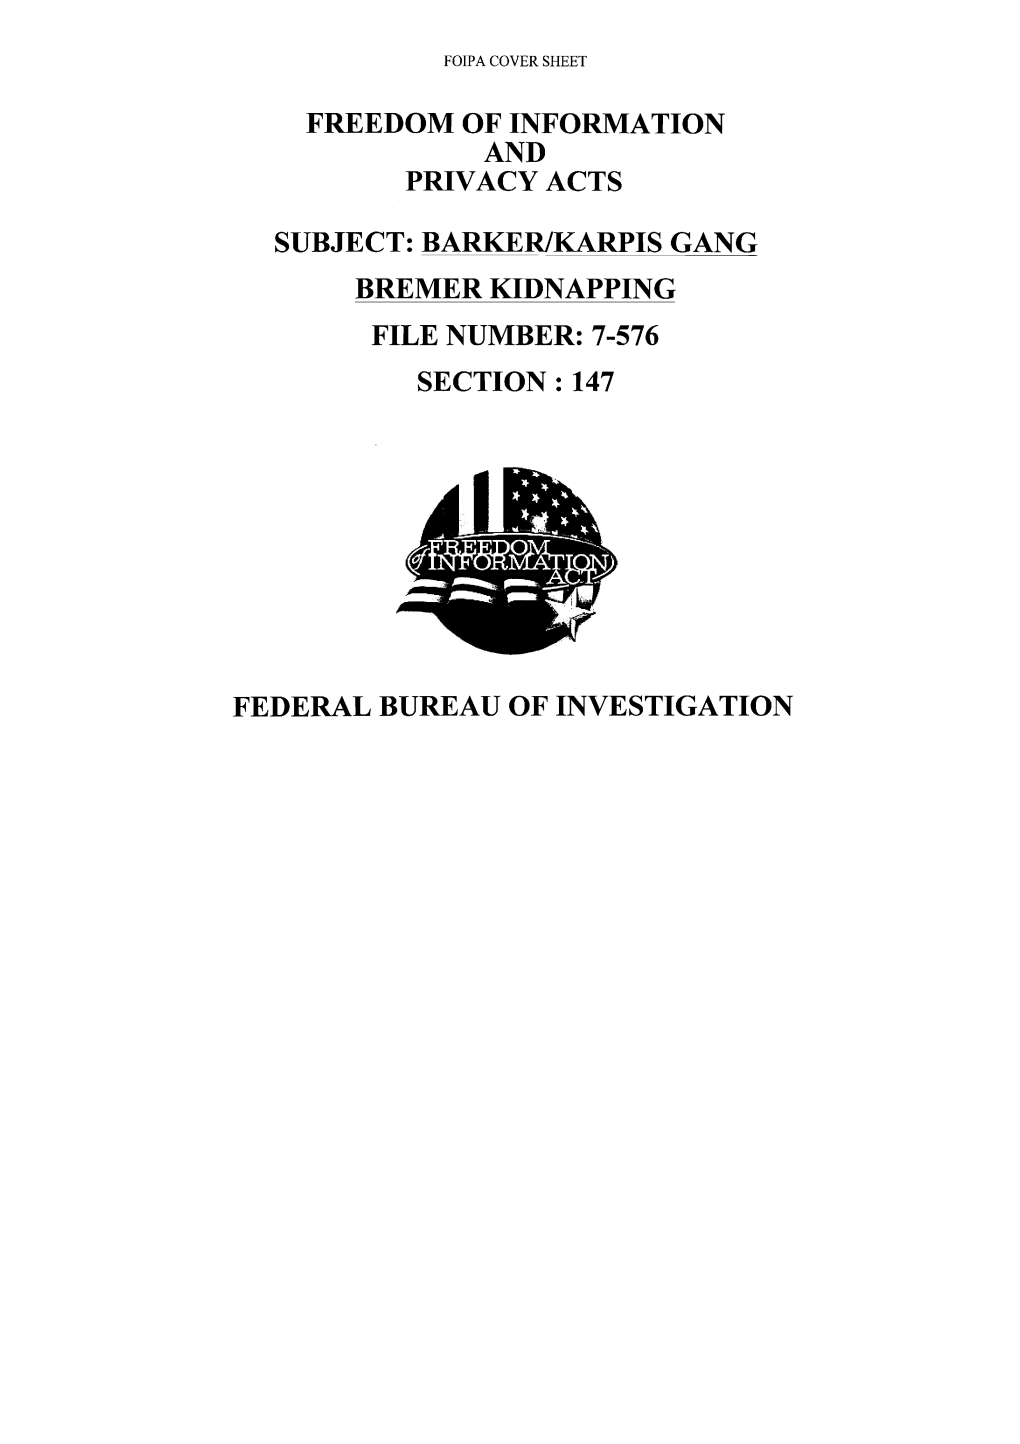 Barker/Karpis Gang Bremer Kidnapping File